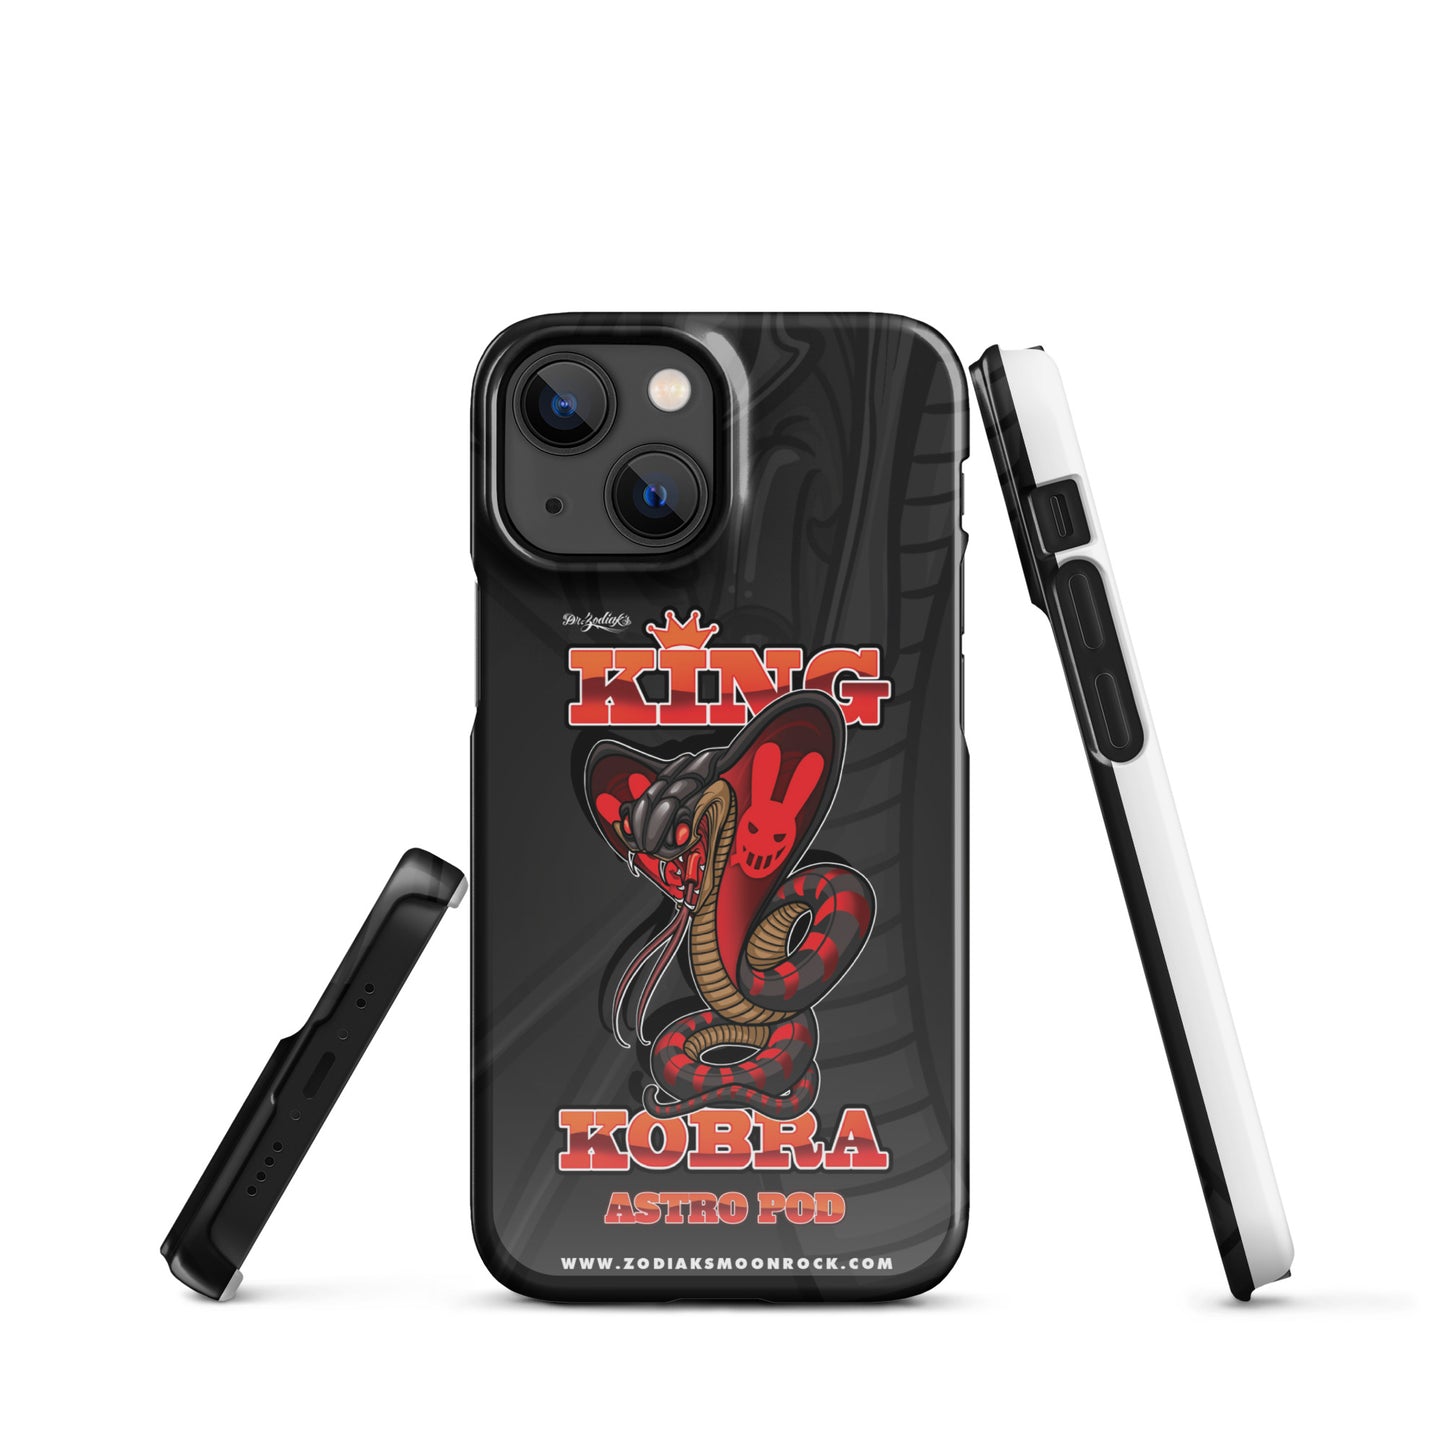 Dr. Zodiak's Moonrock - King Cobra - Snap case for iPhone®